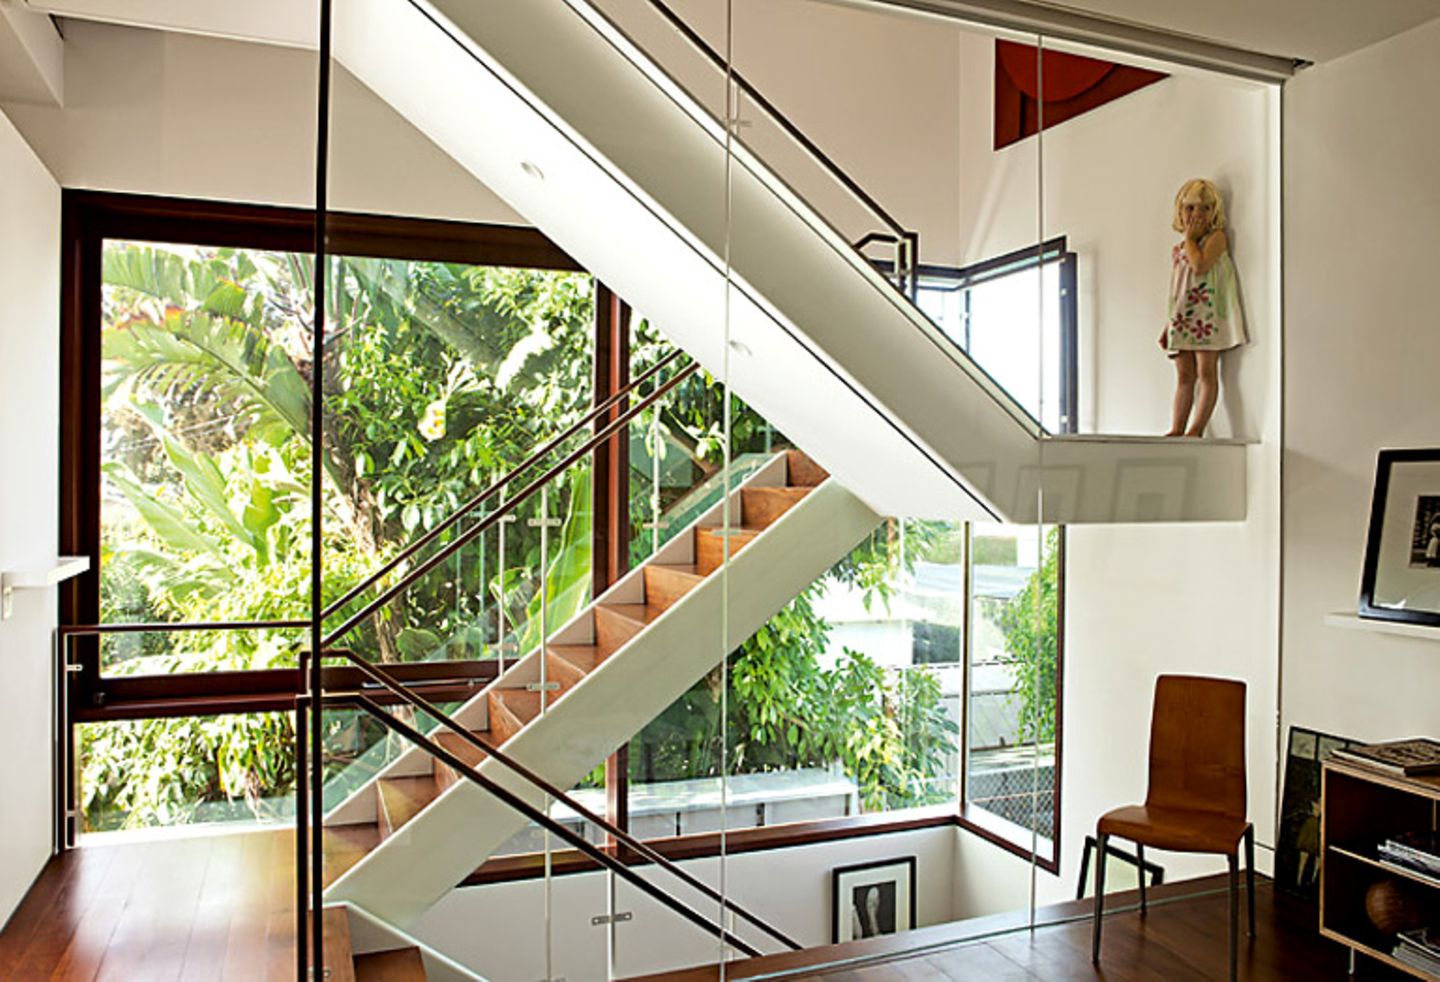 Verglastes Treppenhaus mit Blick ins Grüne